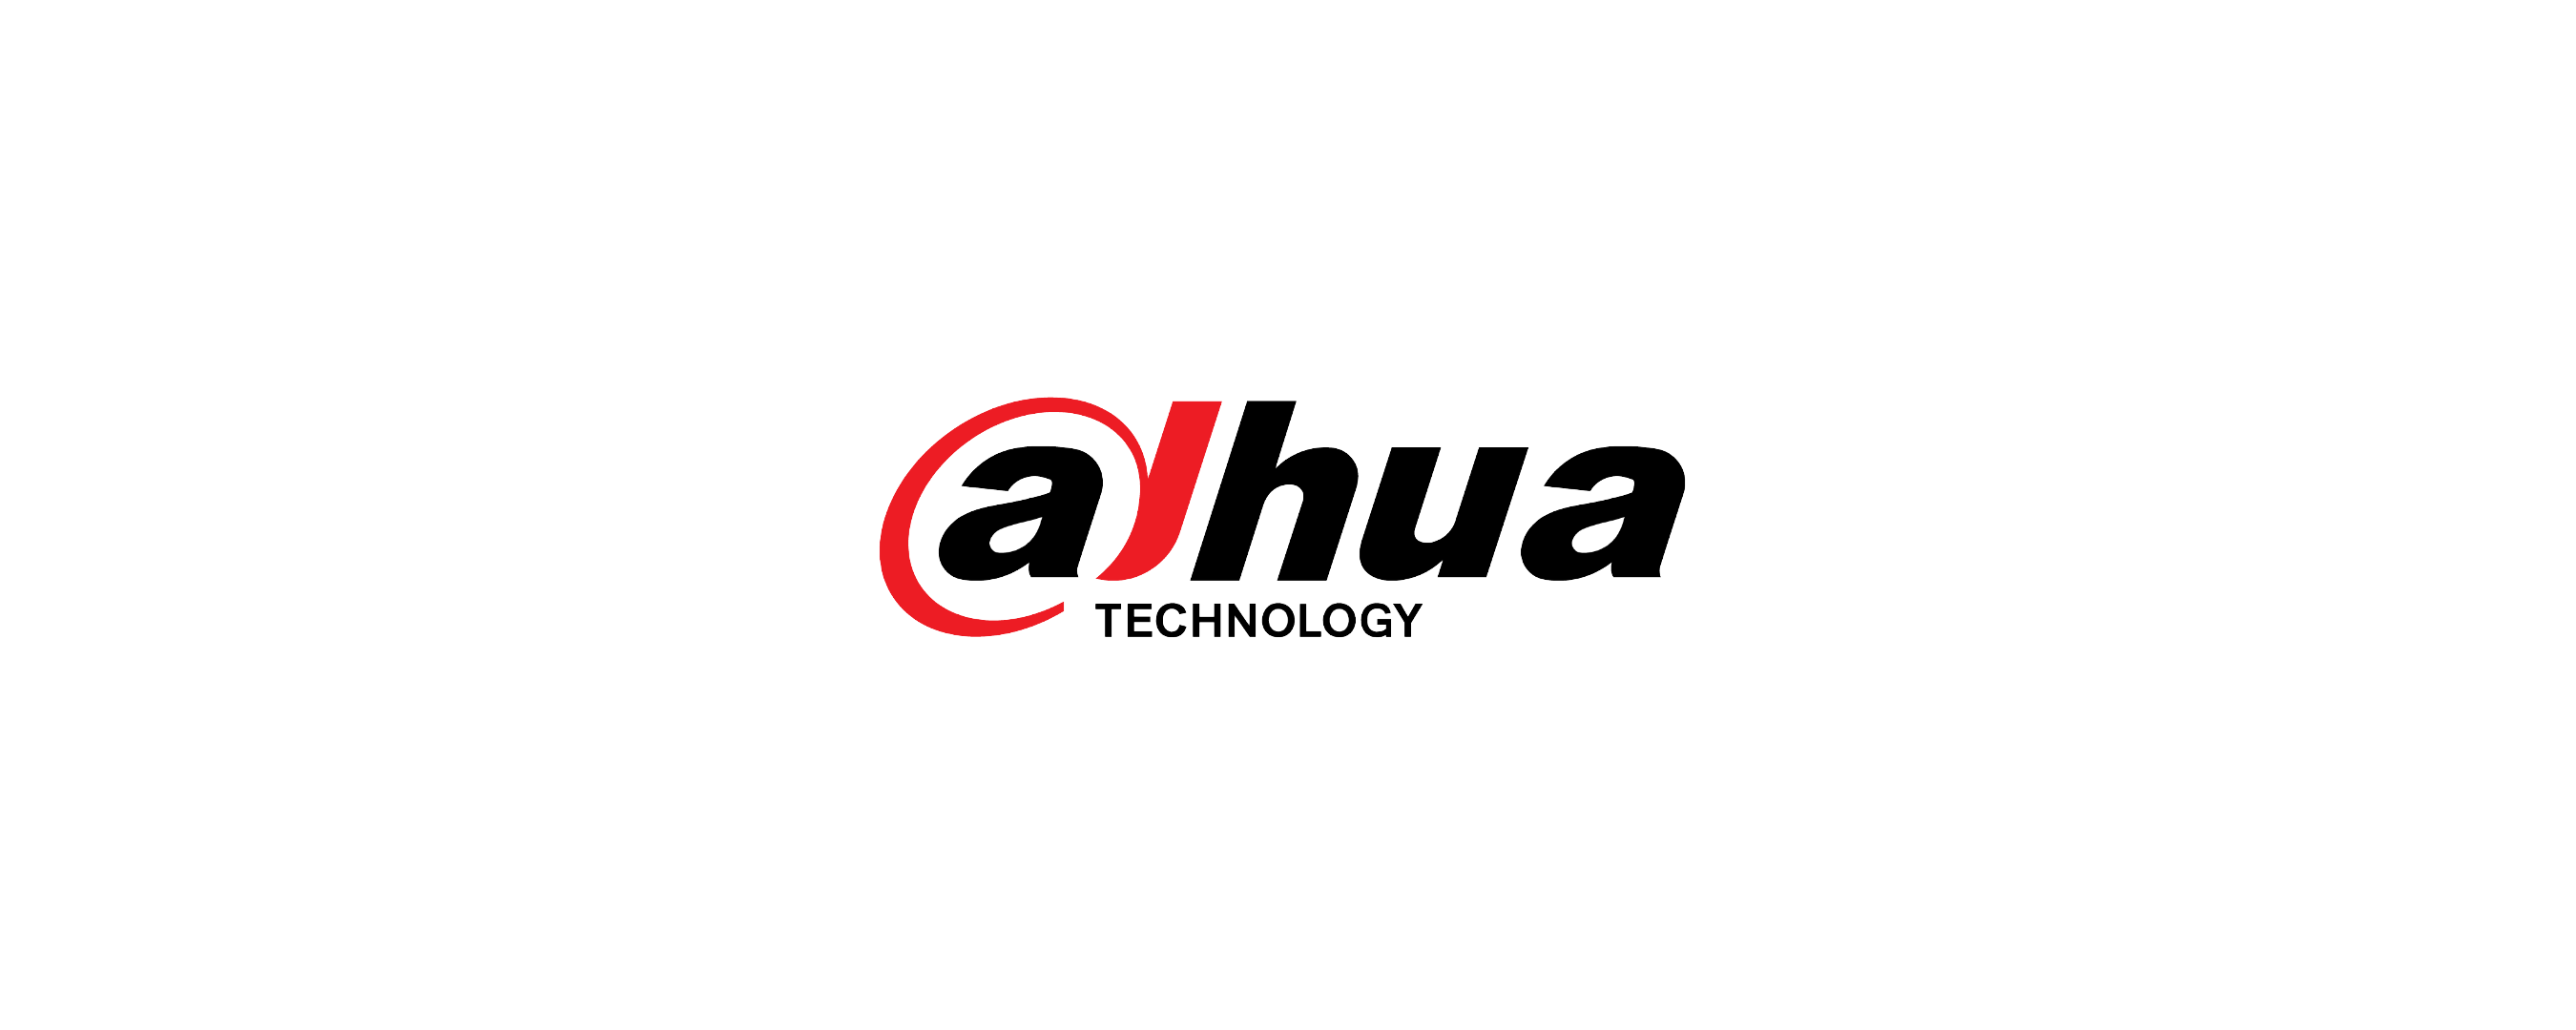 Alhua Technology logo